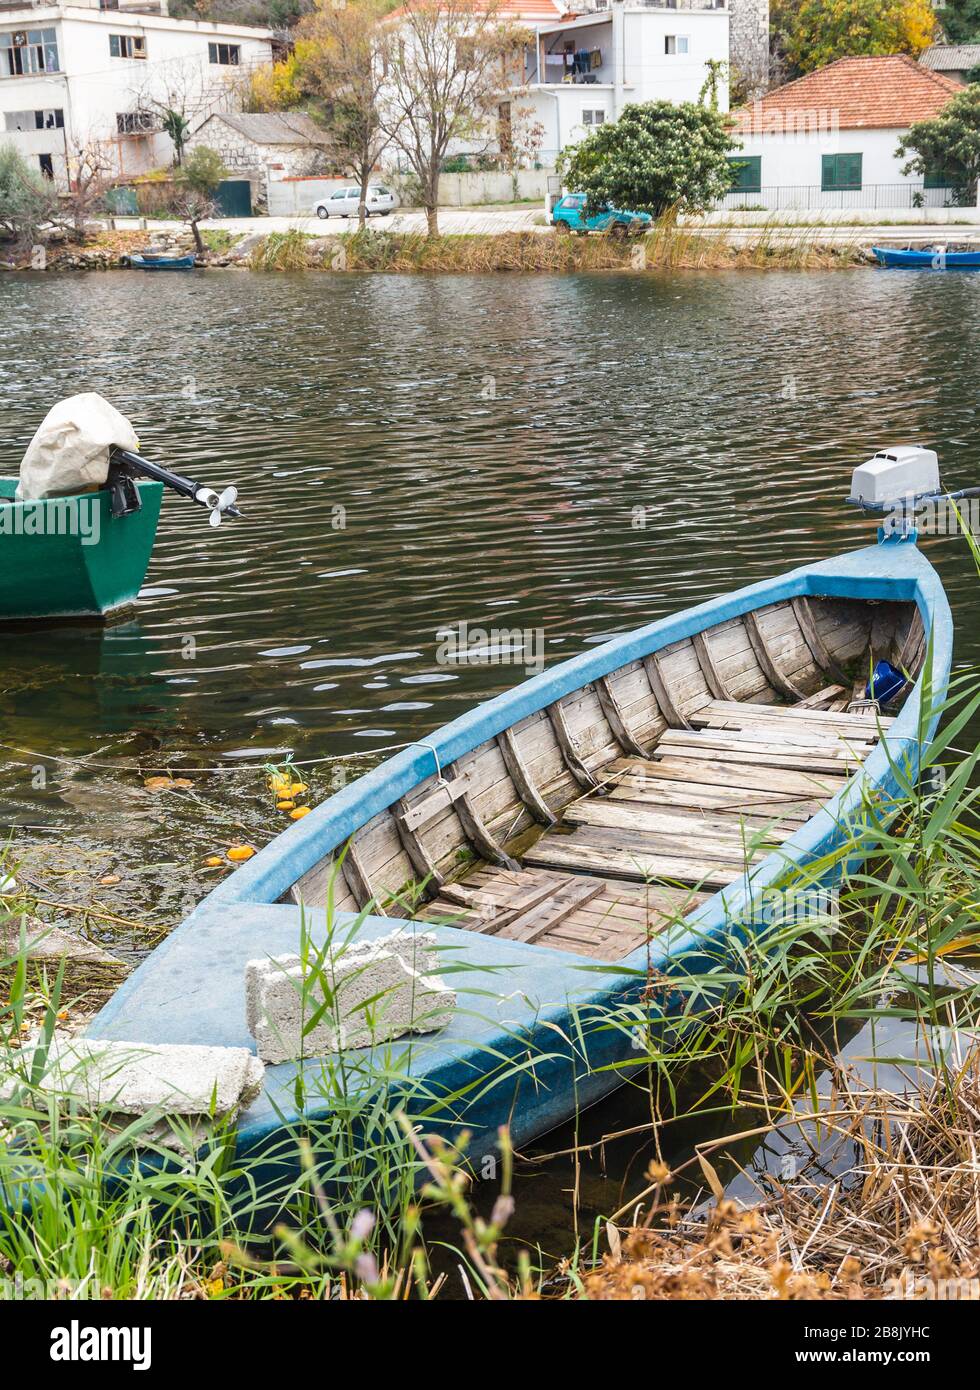 Small fishing boat on the river Neretva. City of Opuzen, Dalmatia region, republic of Croatia Stock Photo